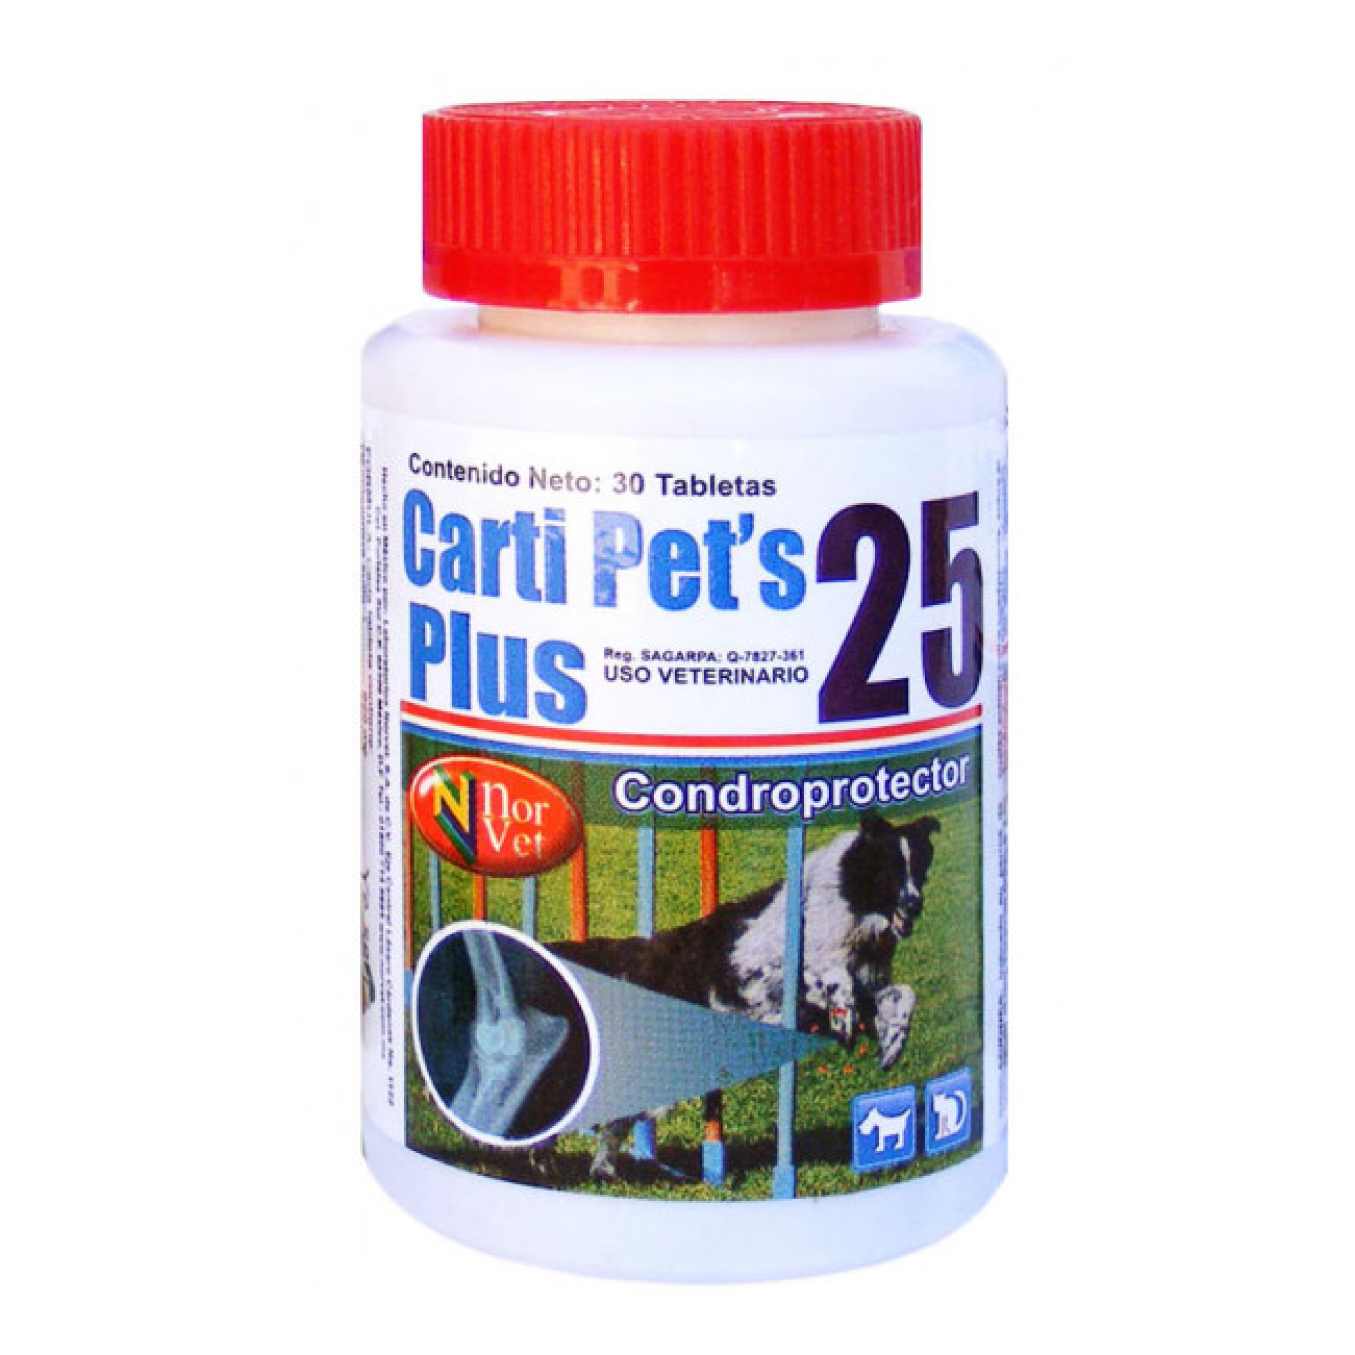 Carti Pets Plus 25 Norvet  30 Tabletas